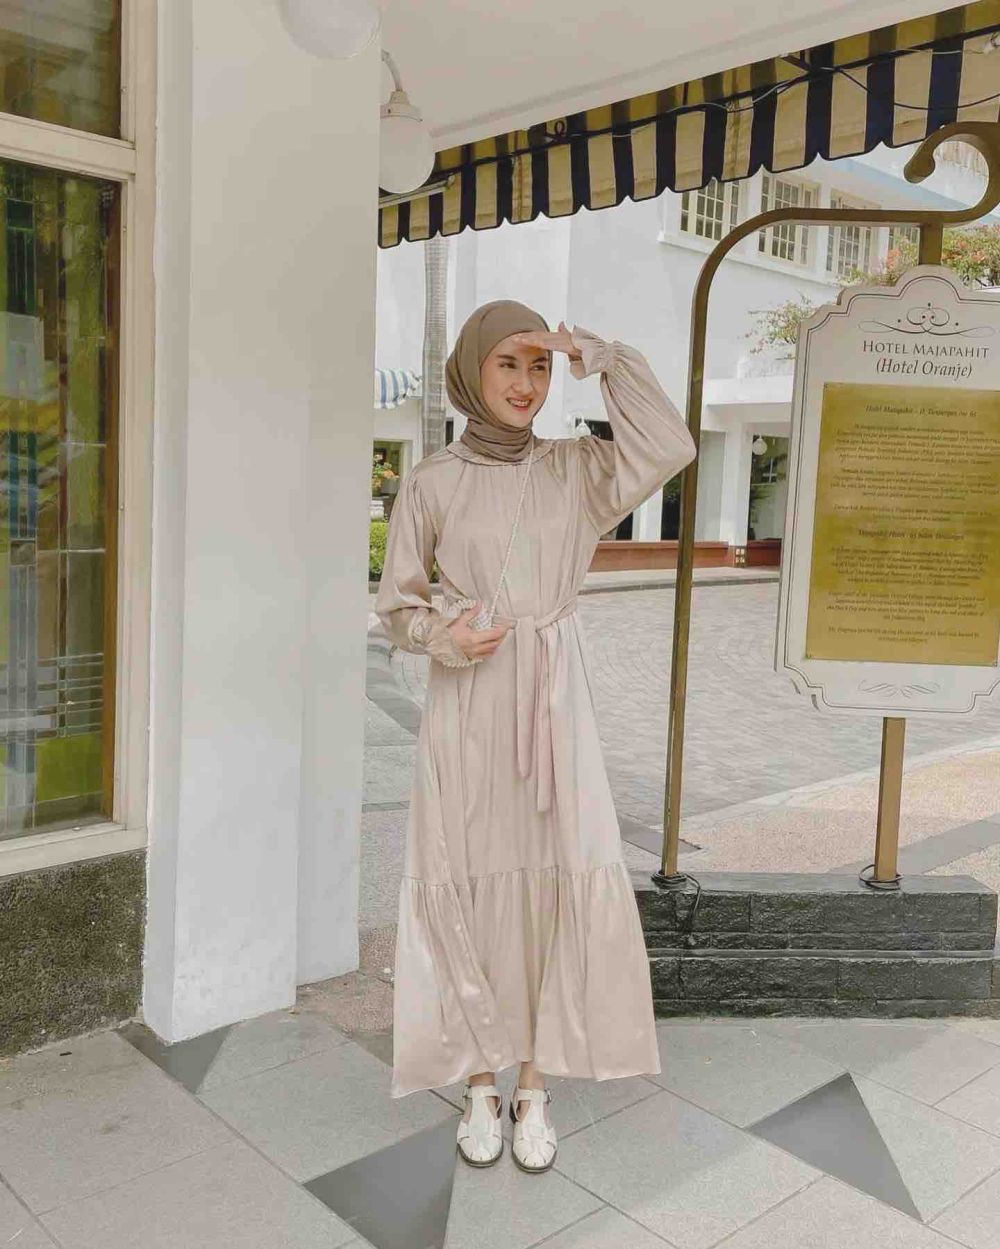 7 Inspirasi Outfit Hijabers untuk Buka Bersama, Kasual nan Stylish